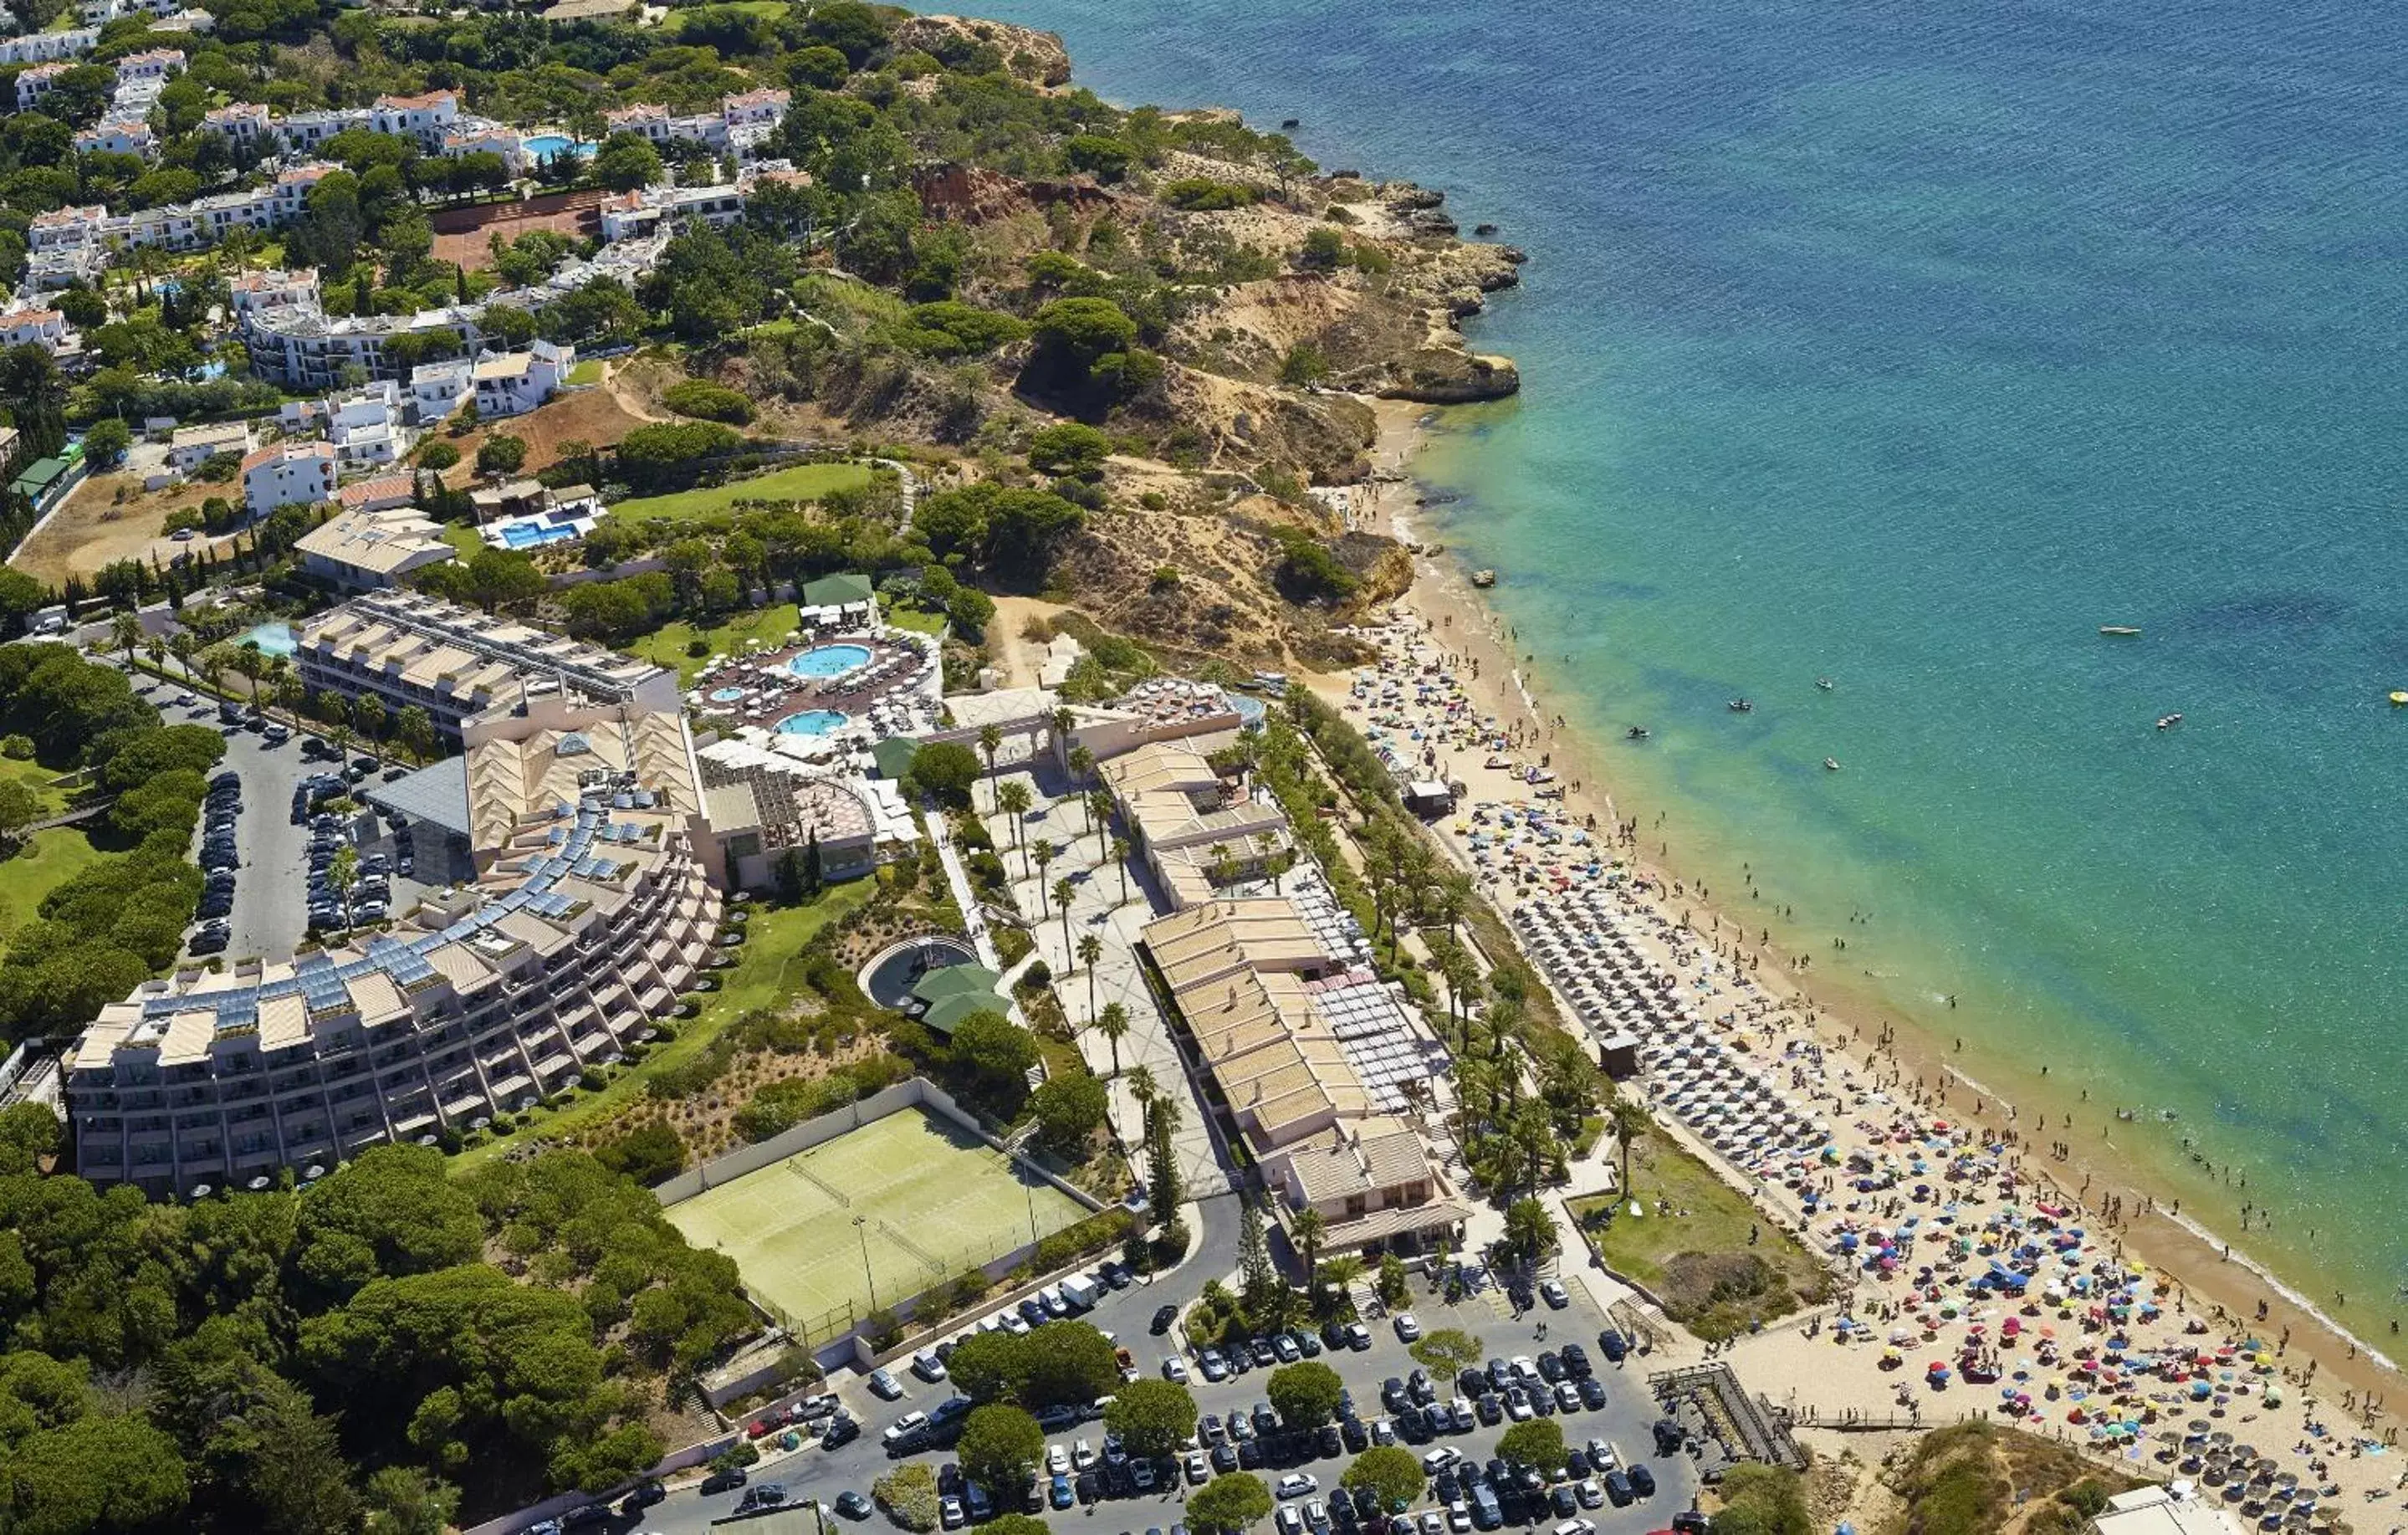 Bird's eye view, Bird's-eye View in Grande Real Santa Eulalia Resort & Hotel Spa